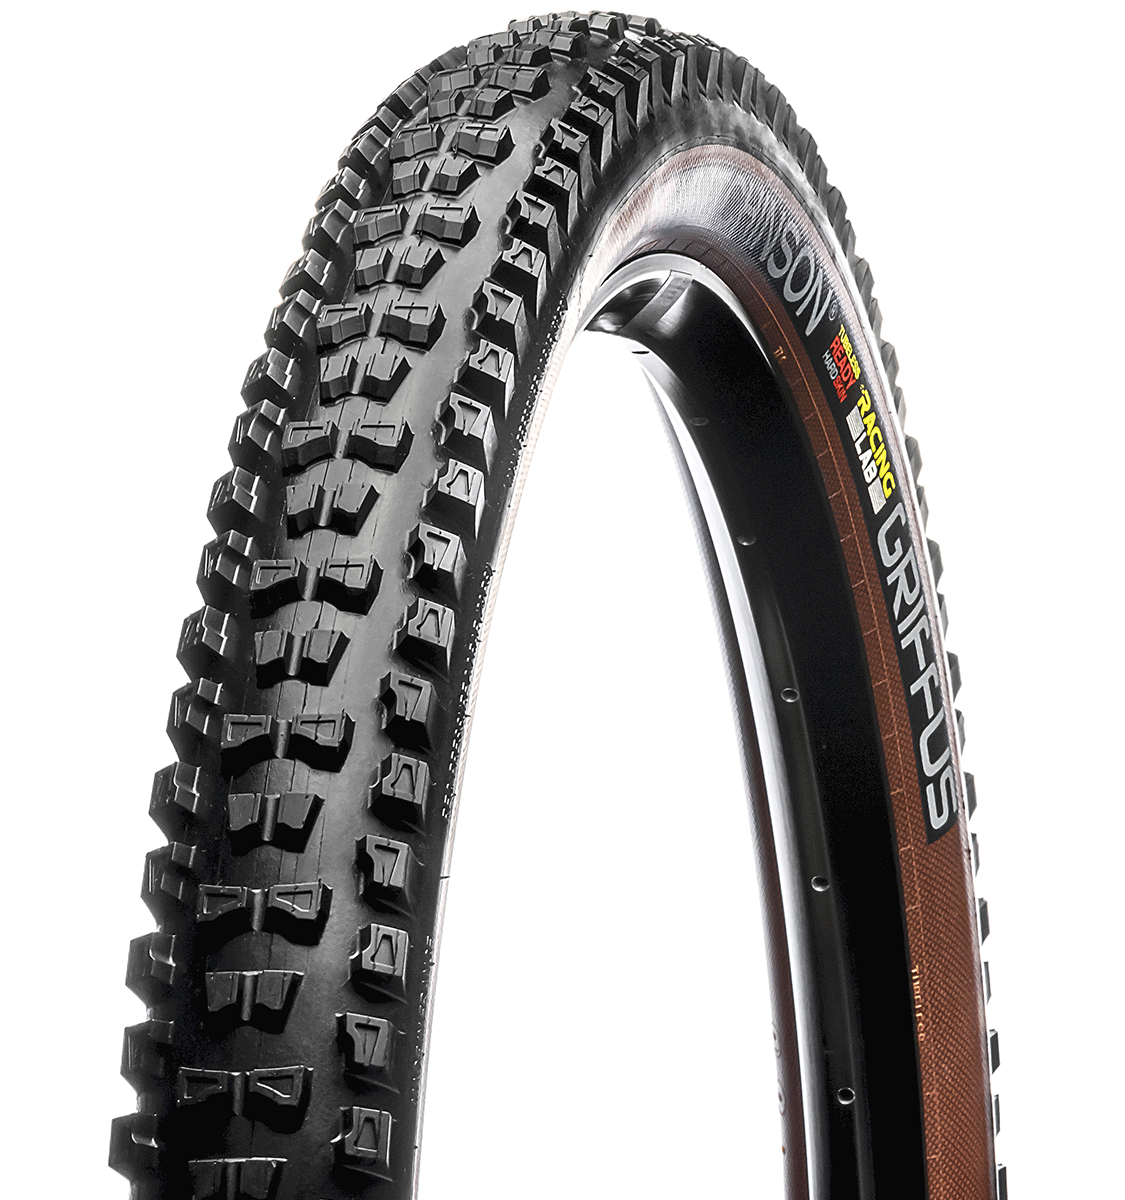 Griffus Mountain bike tyre tan wall